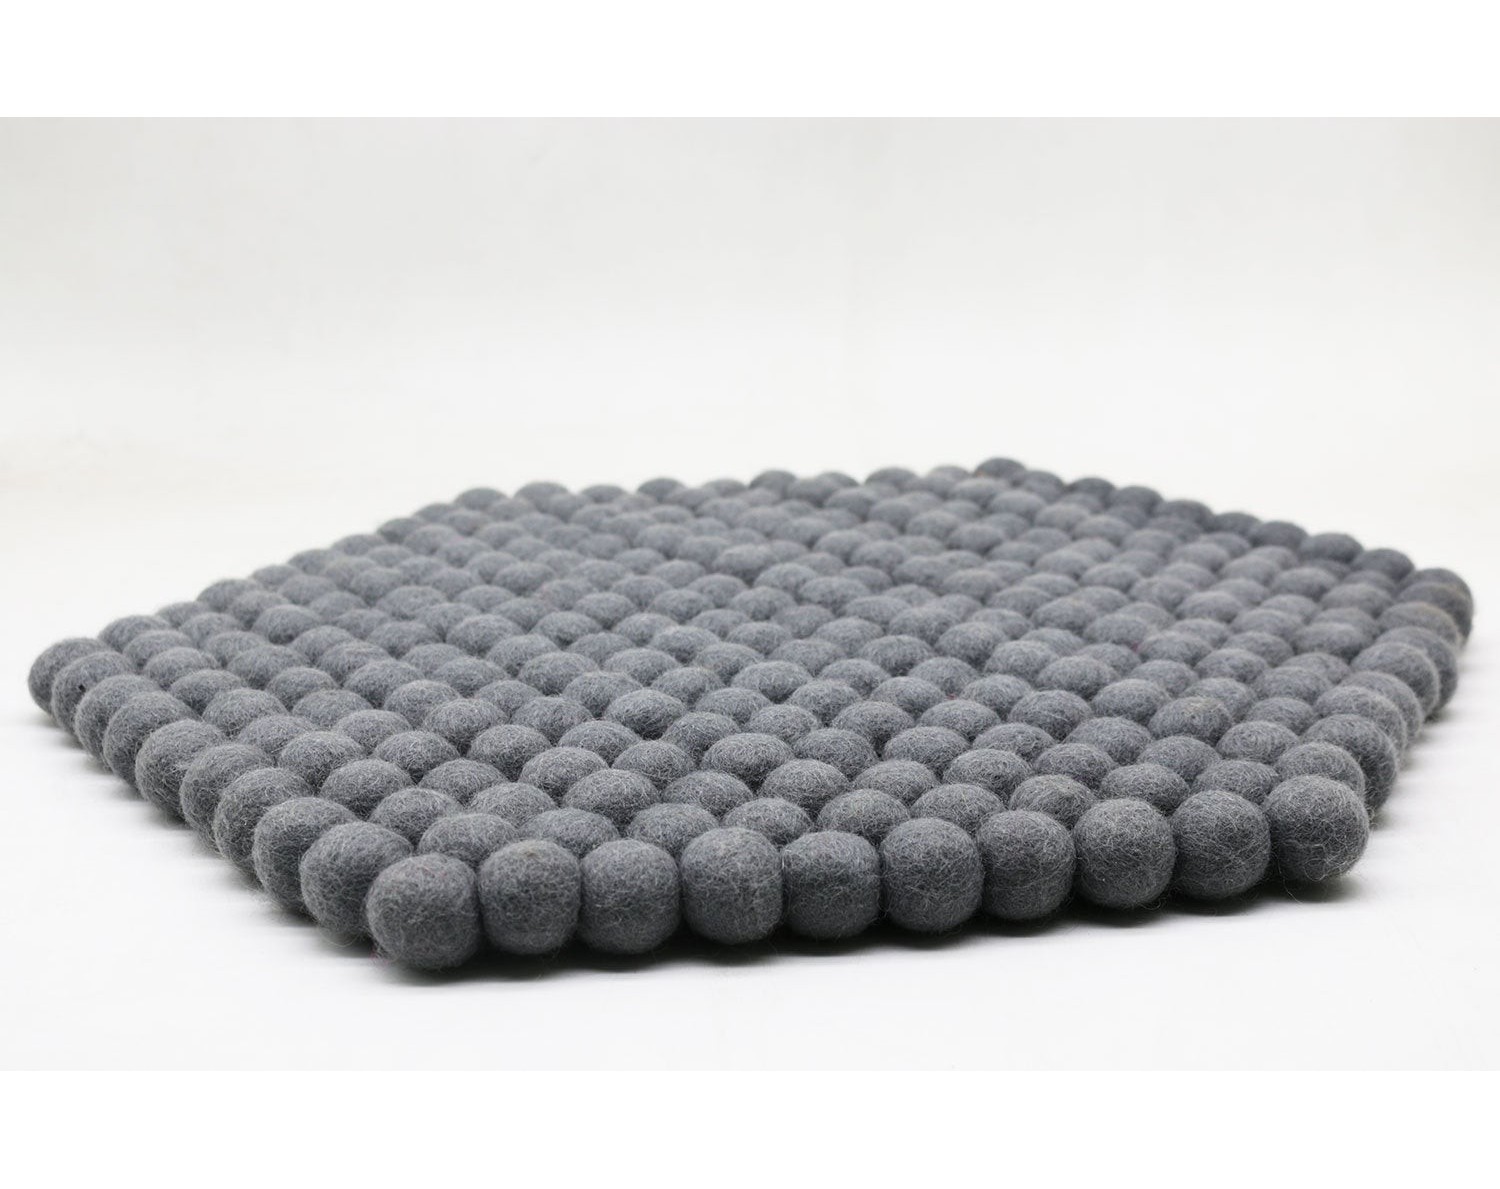 4 Pcs Gray Felt Ball Chair Pad [100% Pure Wool]-Felt & Yarn